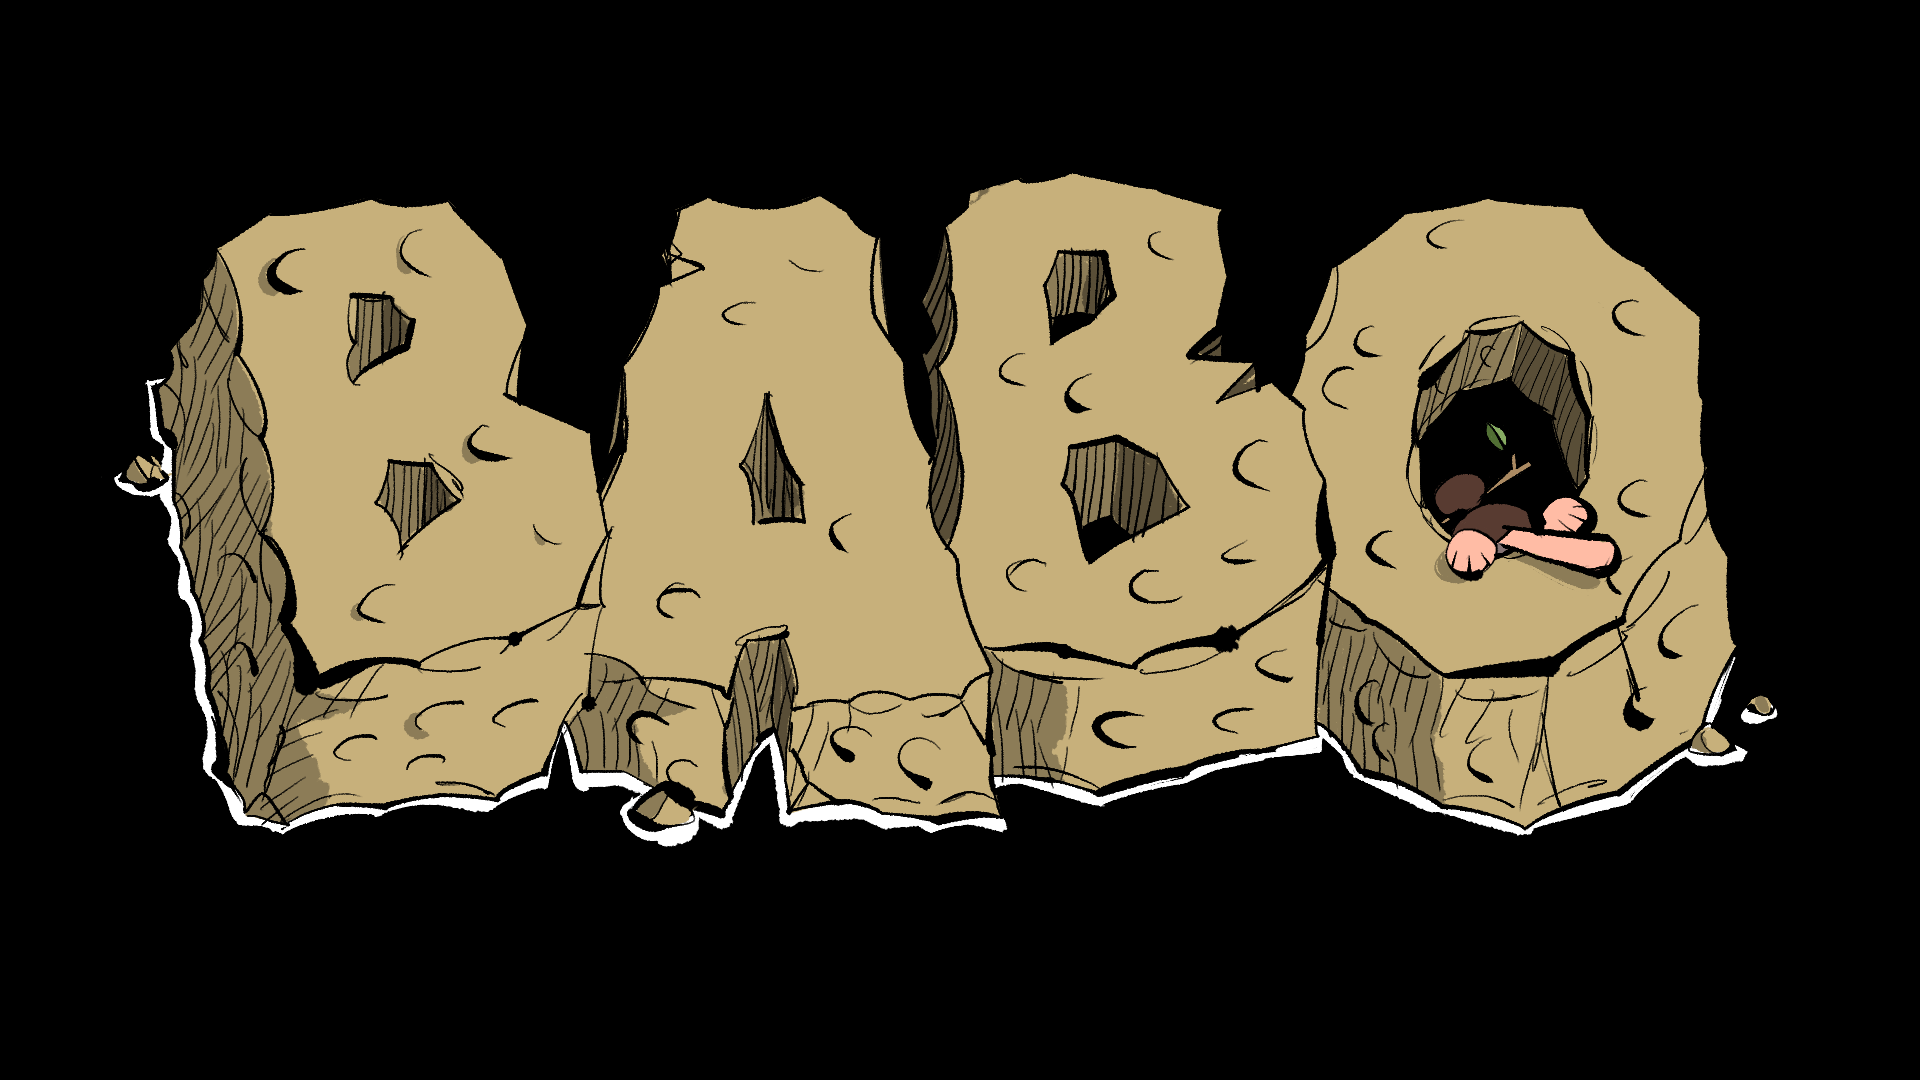 Babo - The Caveman